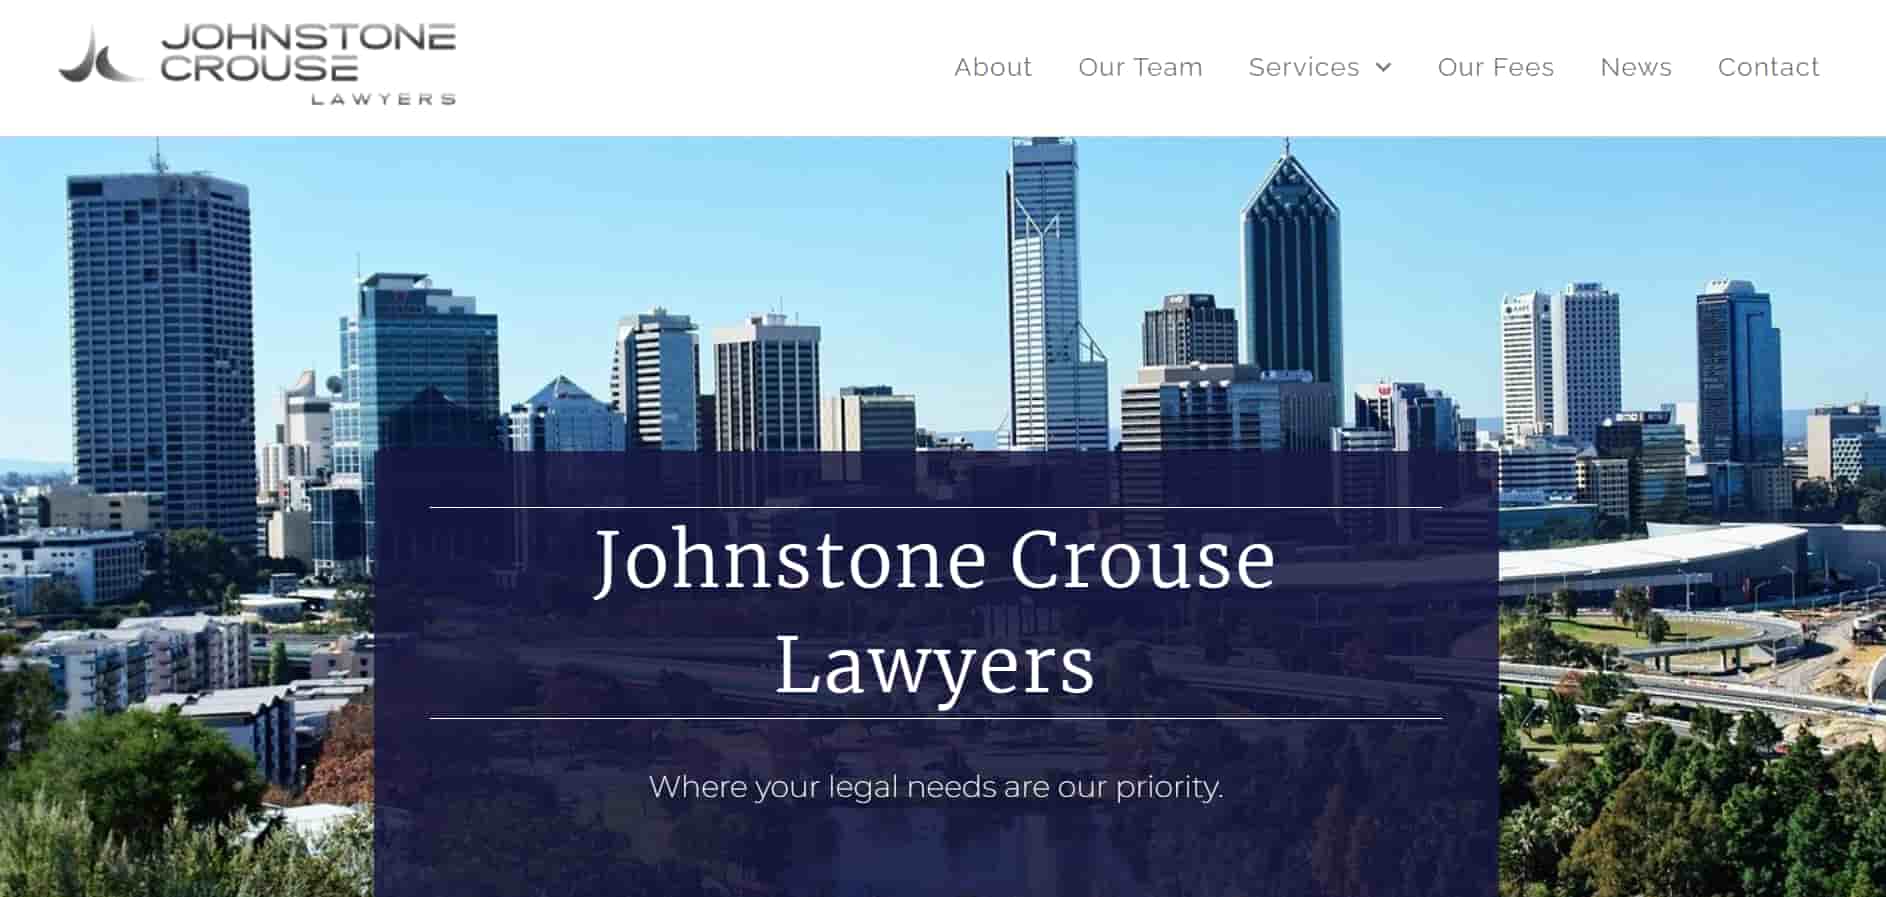 Johnstone Crouse Lawyers